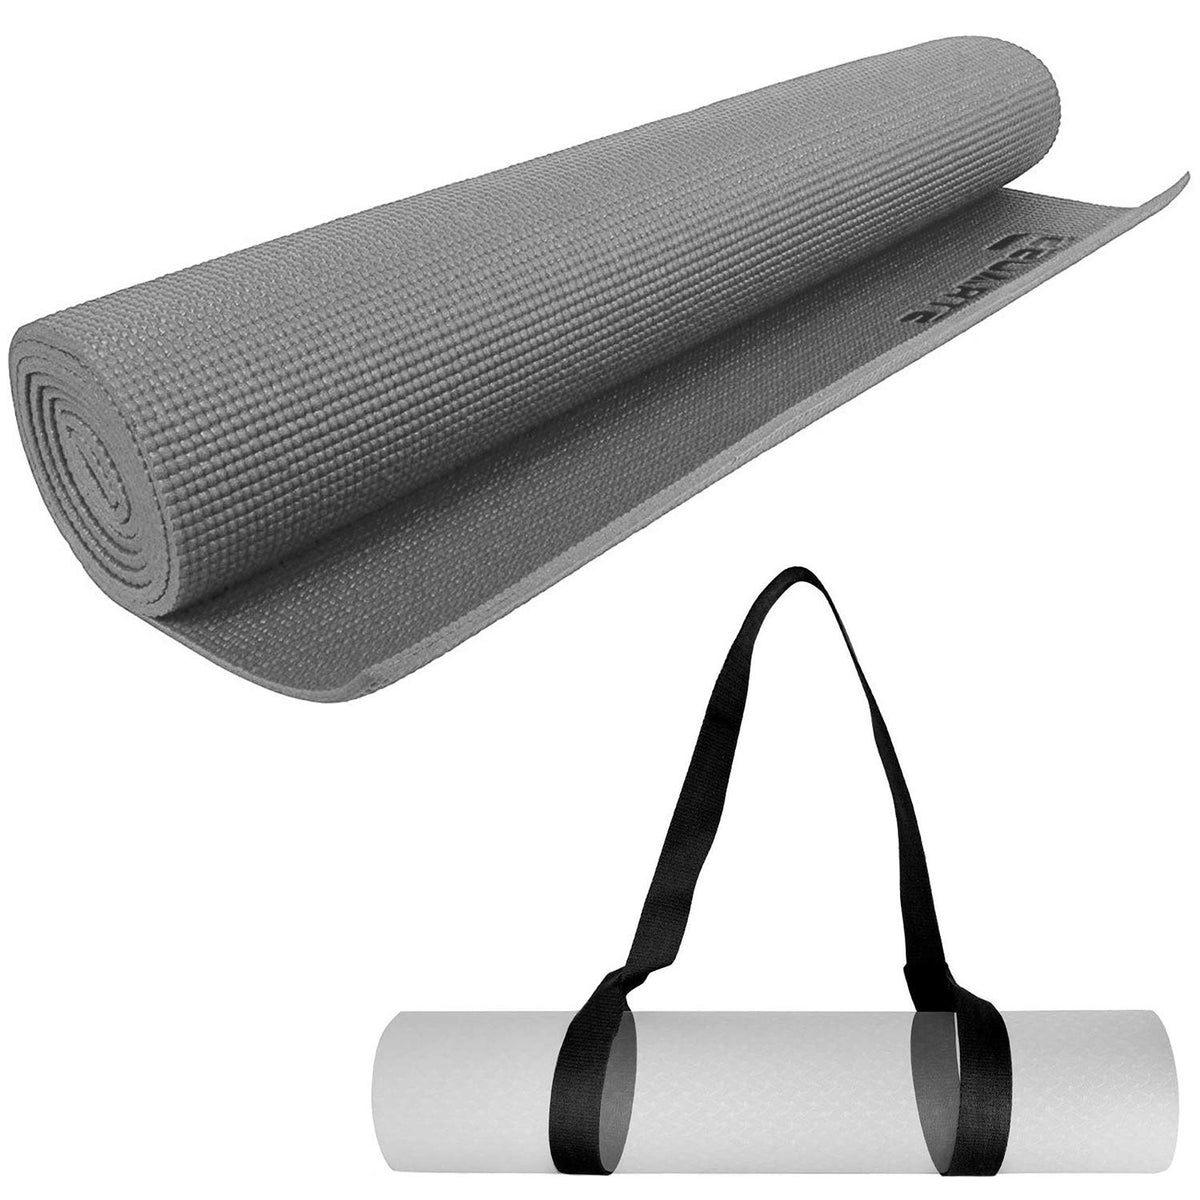 Strauss Yoga Mat, 6mm (Grey) and Yoga Shoes, (Black)